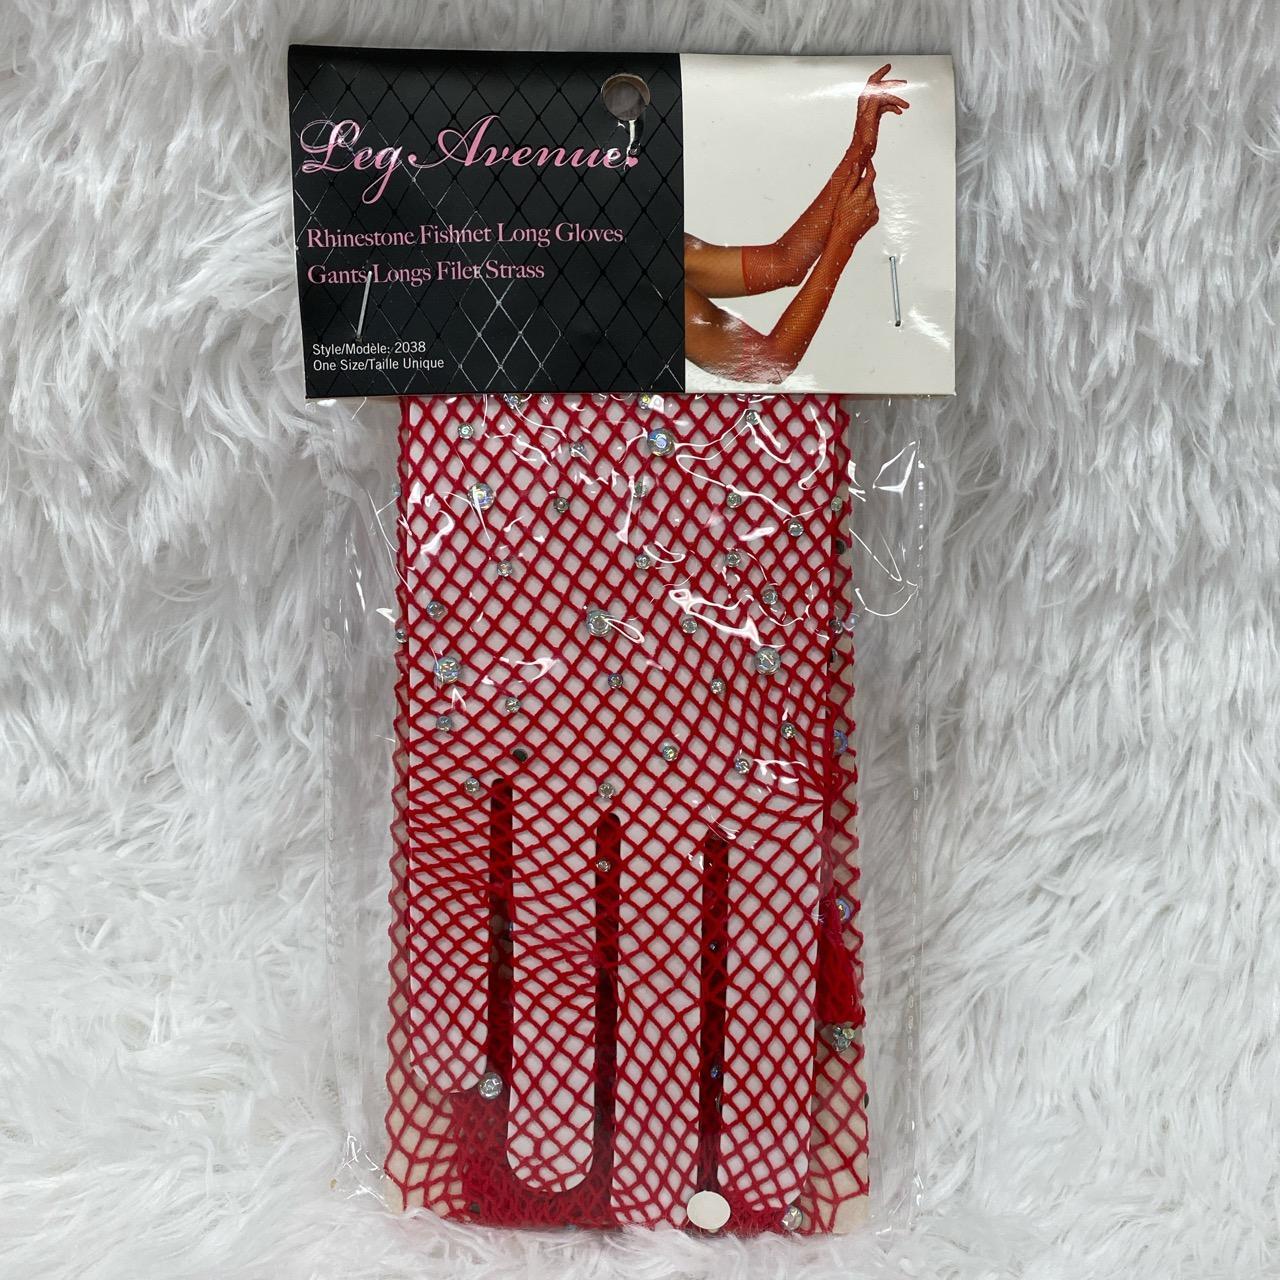 Sparkling Rhinestone Fishnet Long Gloves For Women Perfect Long